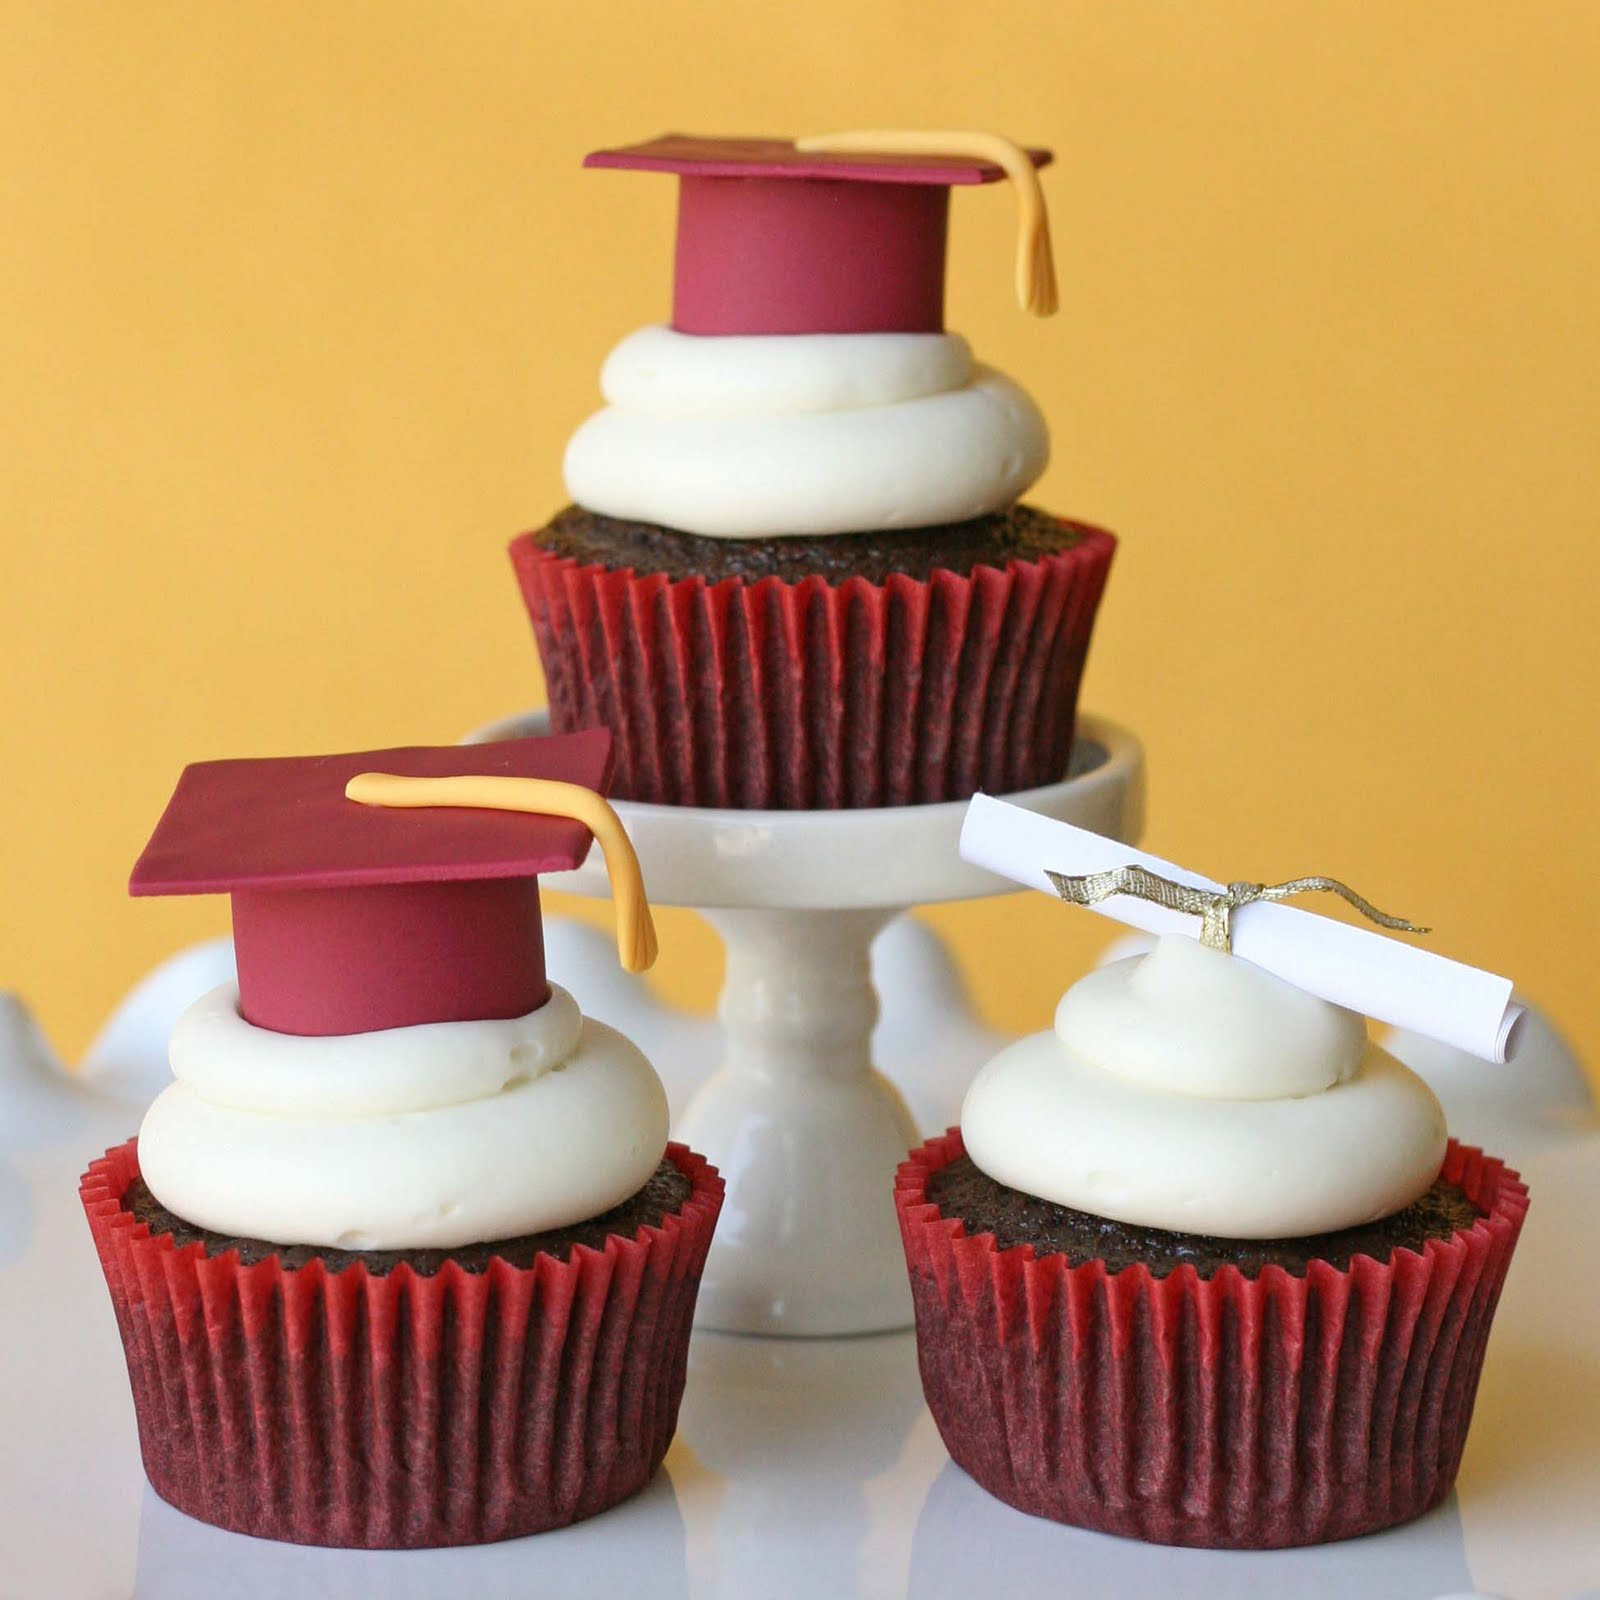 Graduation Party Cupcake Ideas
 Graduation Cupcakes and How To Make Fondant Graduation